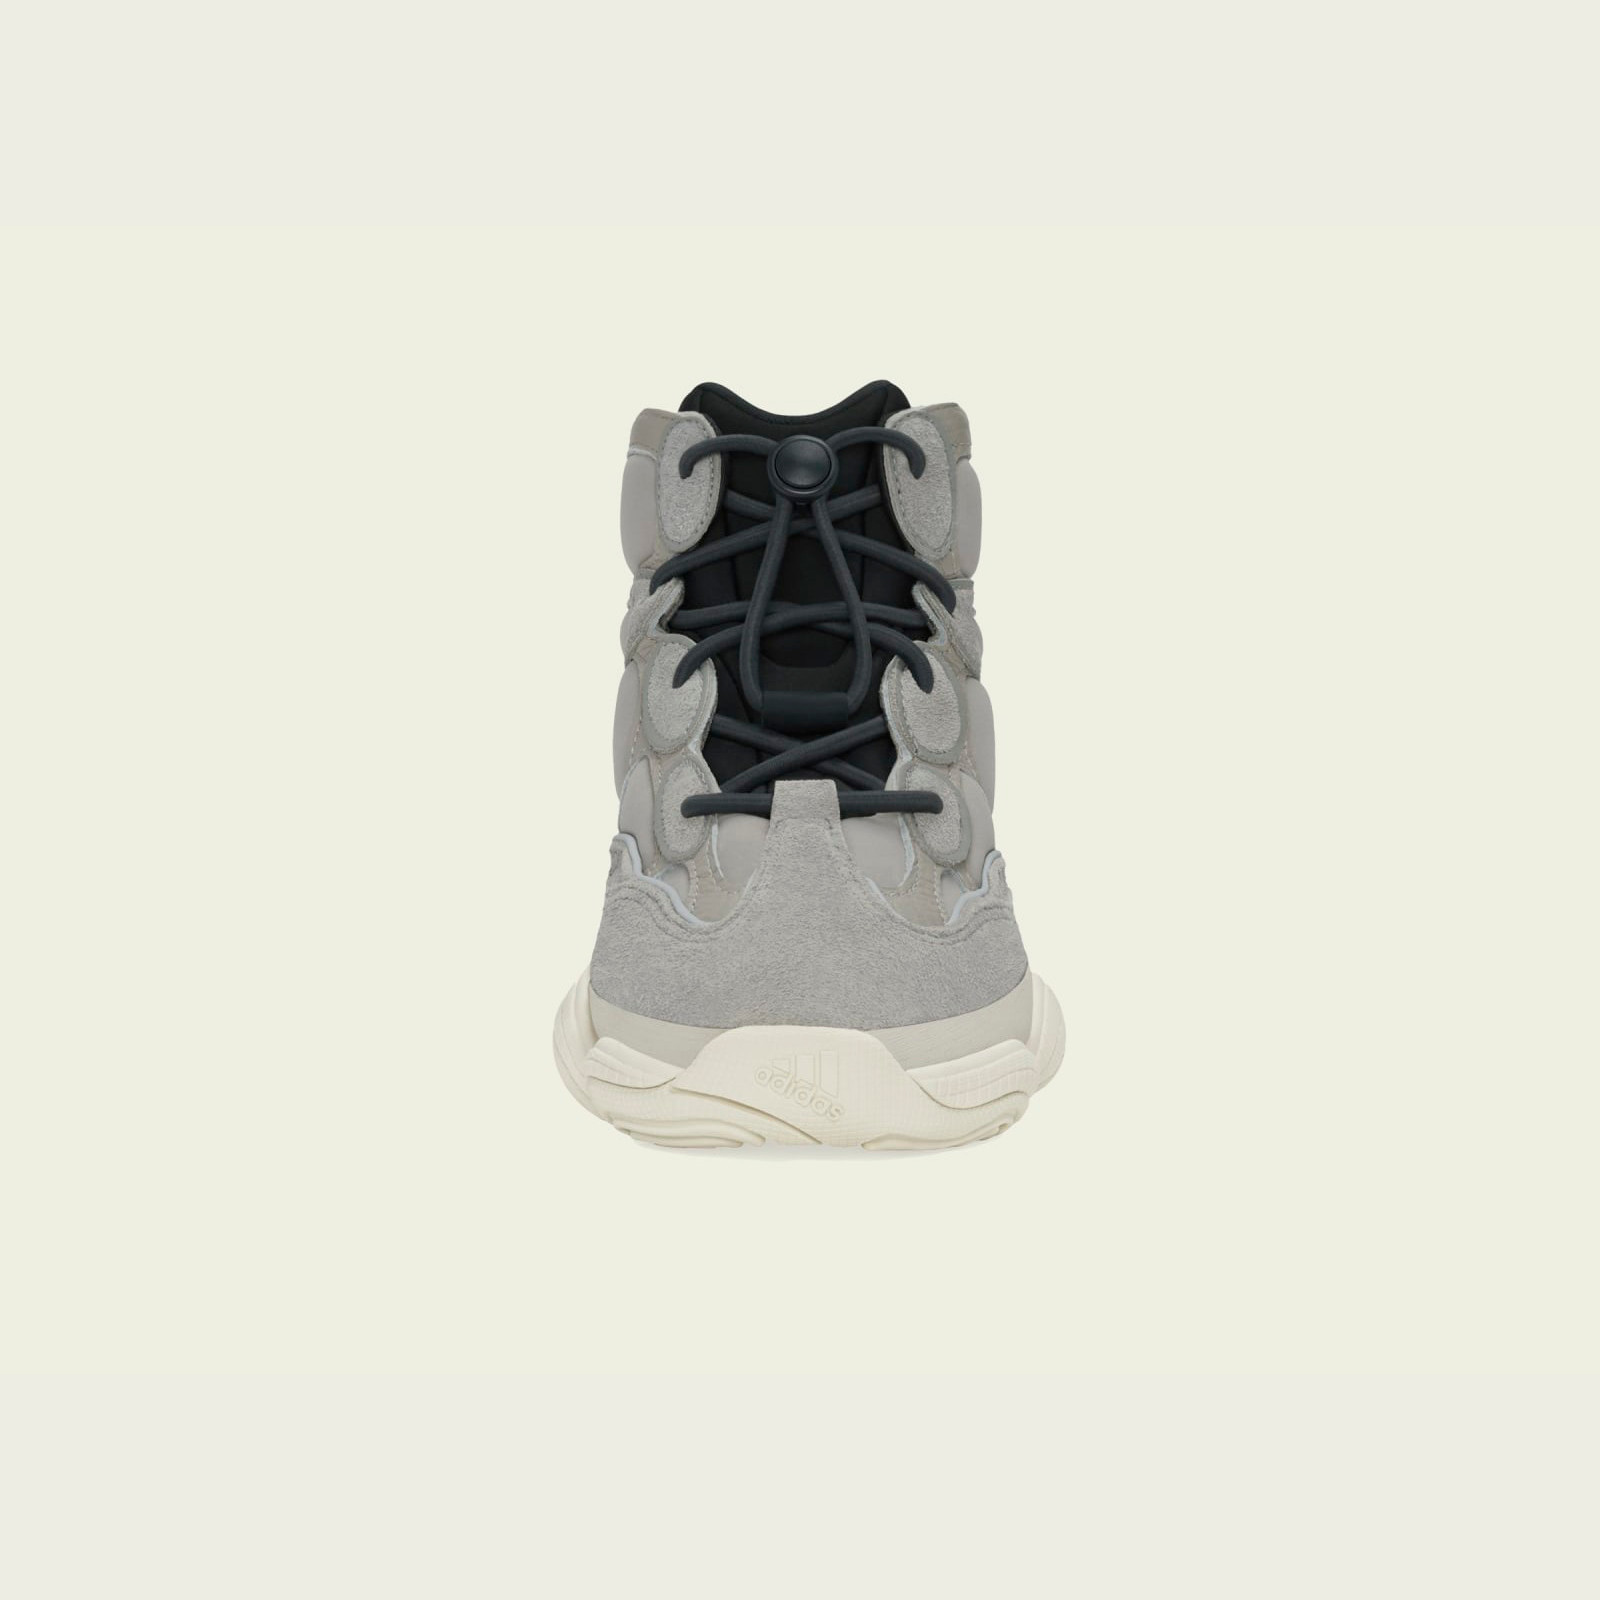 Adidas Yeezy 500 High
« Mist Stone »